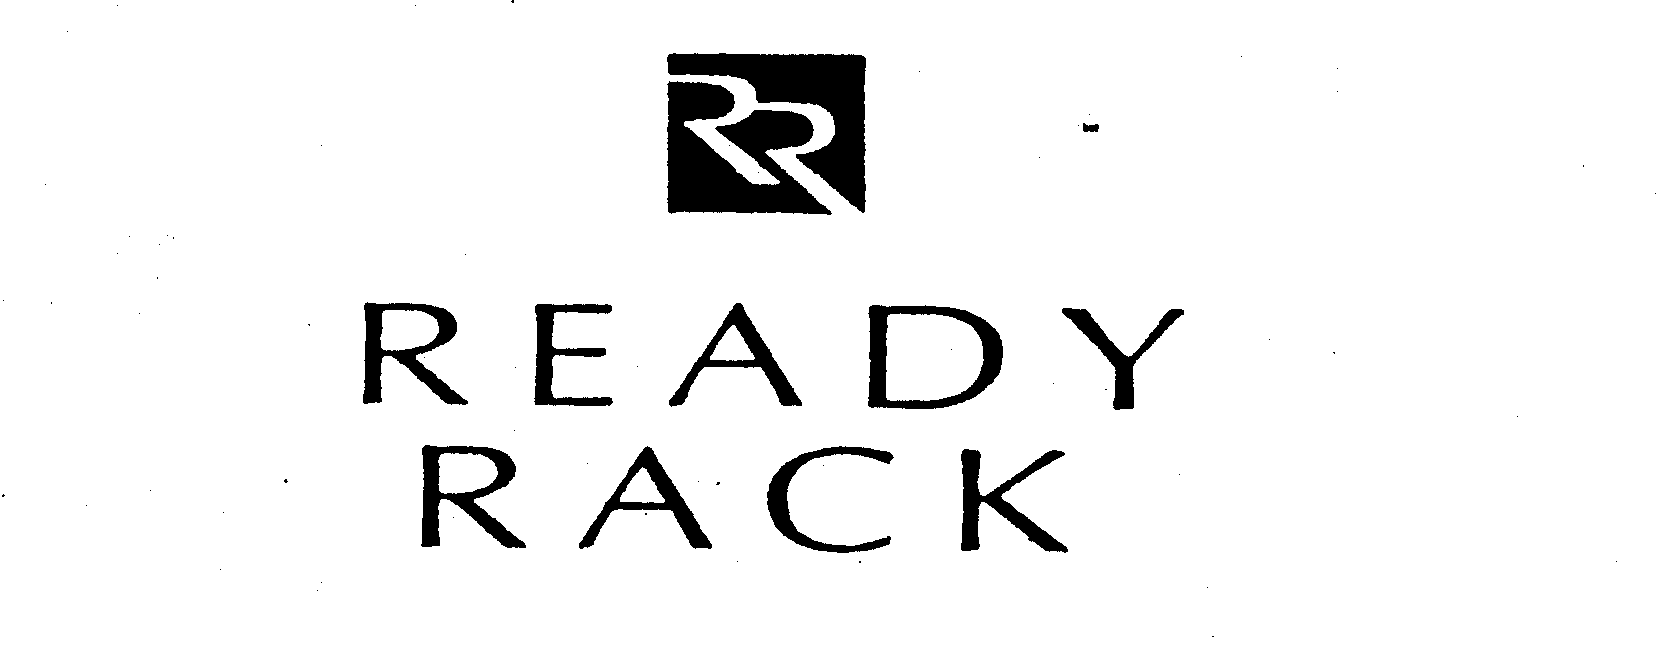  RR READY RACK